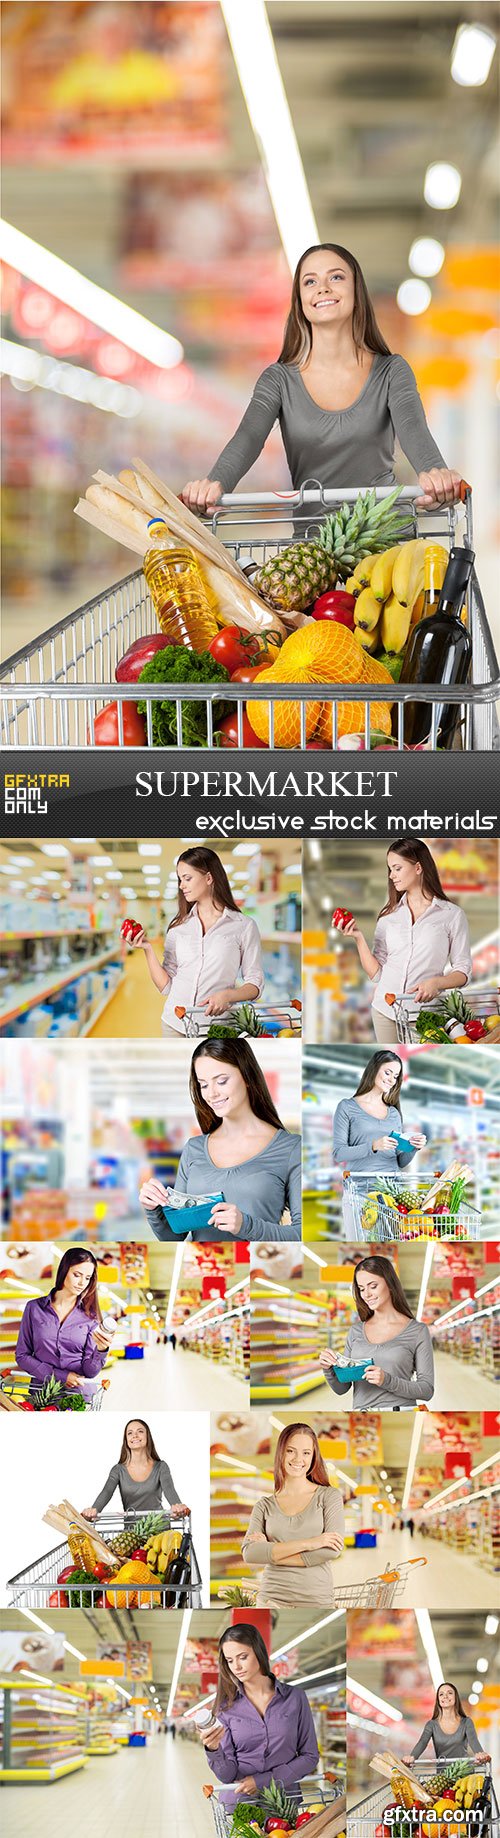 Supermarket, 10 x UHQ JPEG